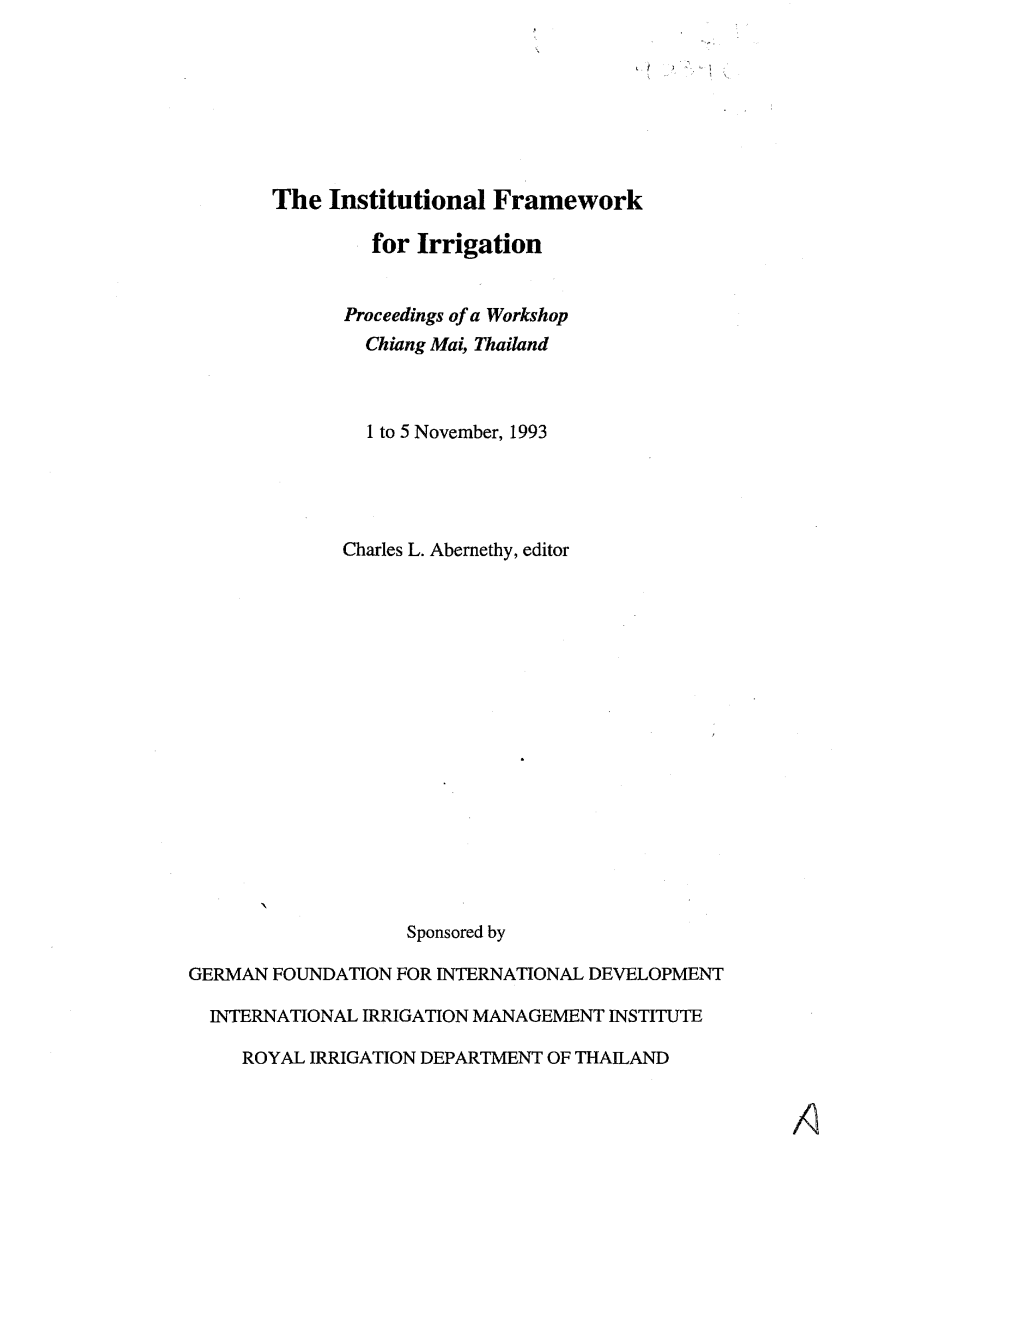 The Institutional Framework for Irrigation